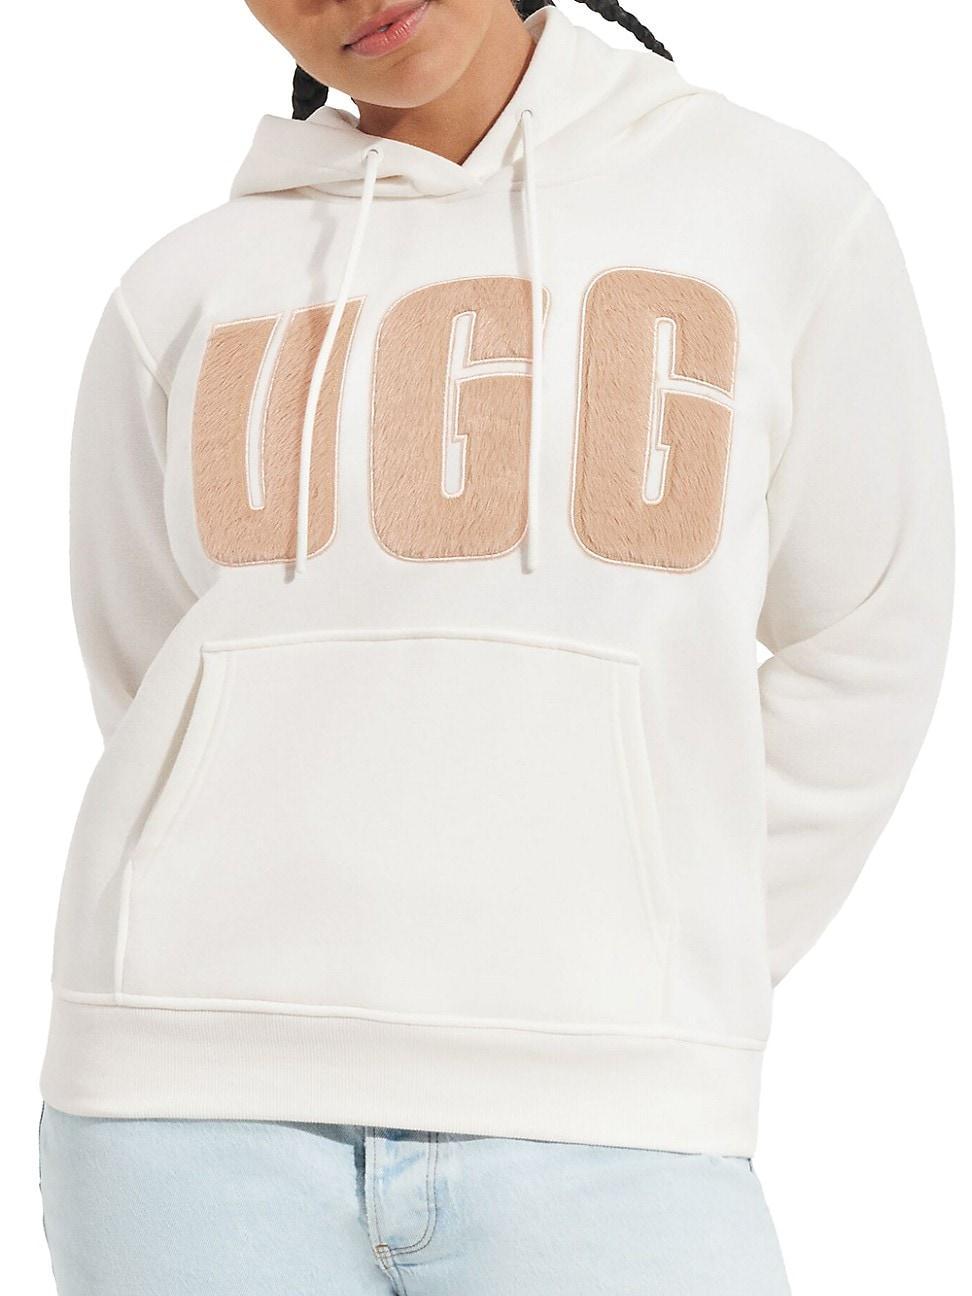 UGG(r) Rey Fluffy Logo Hoodie Product Image